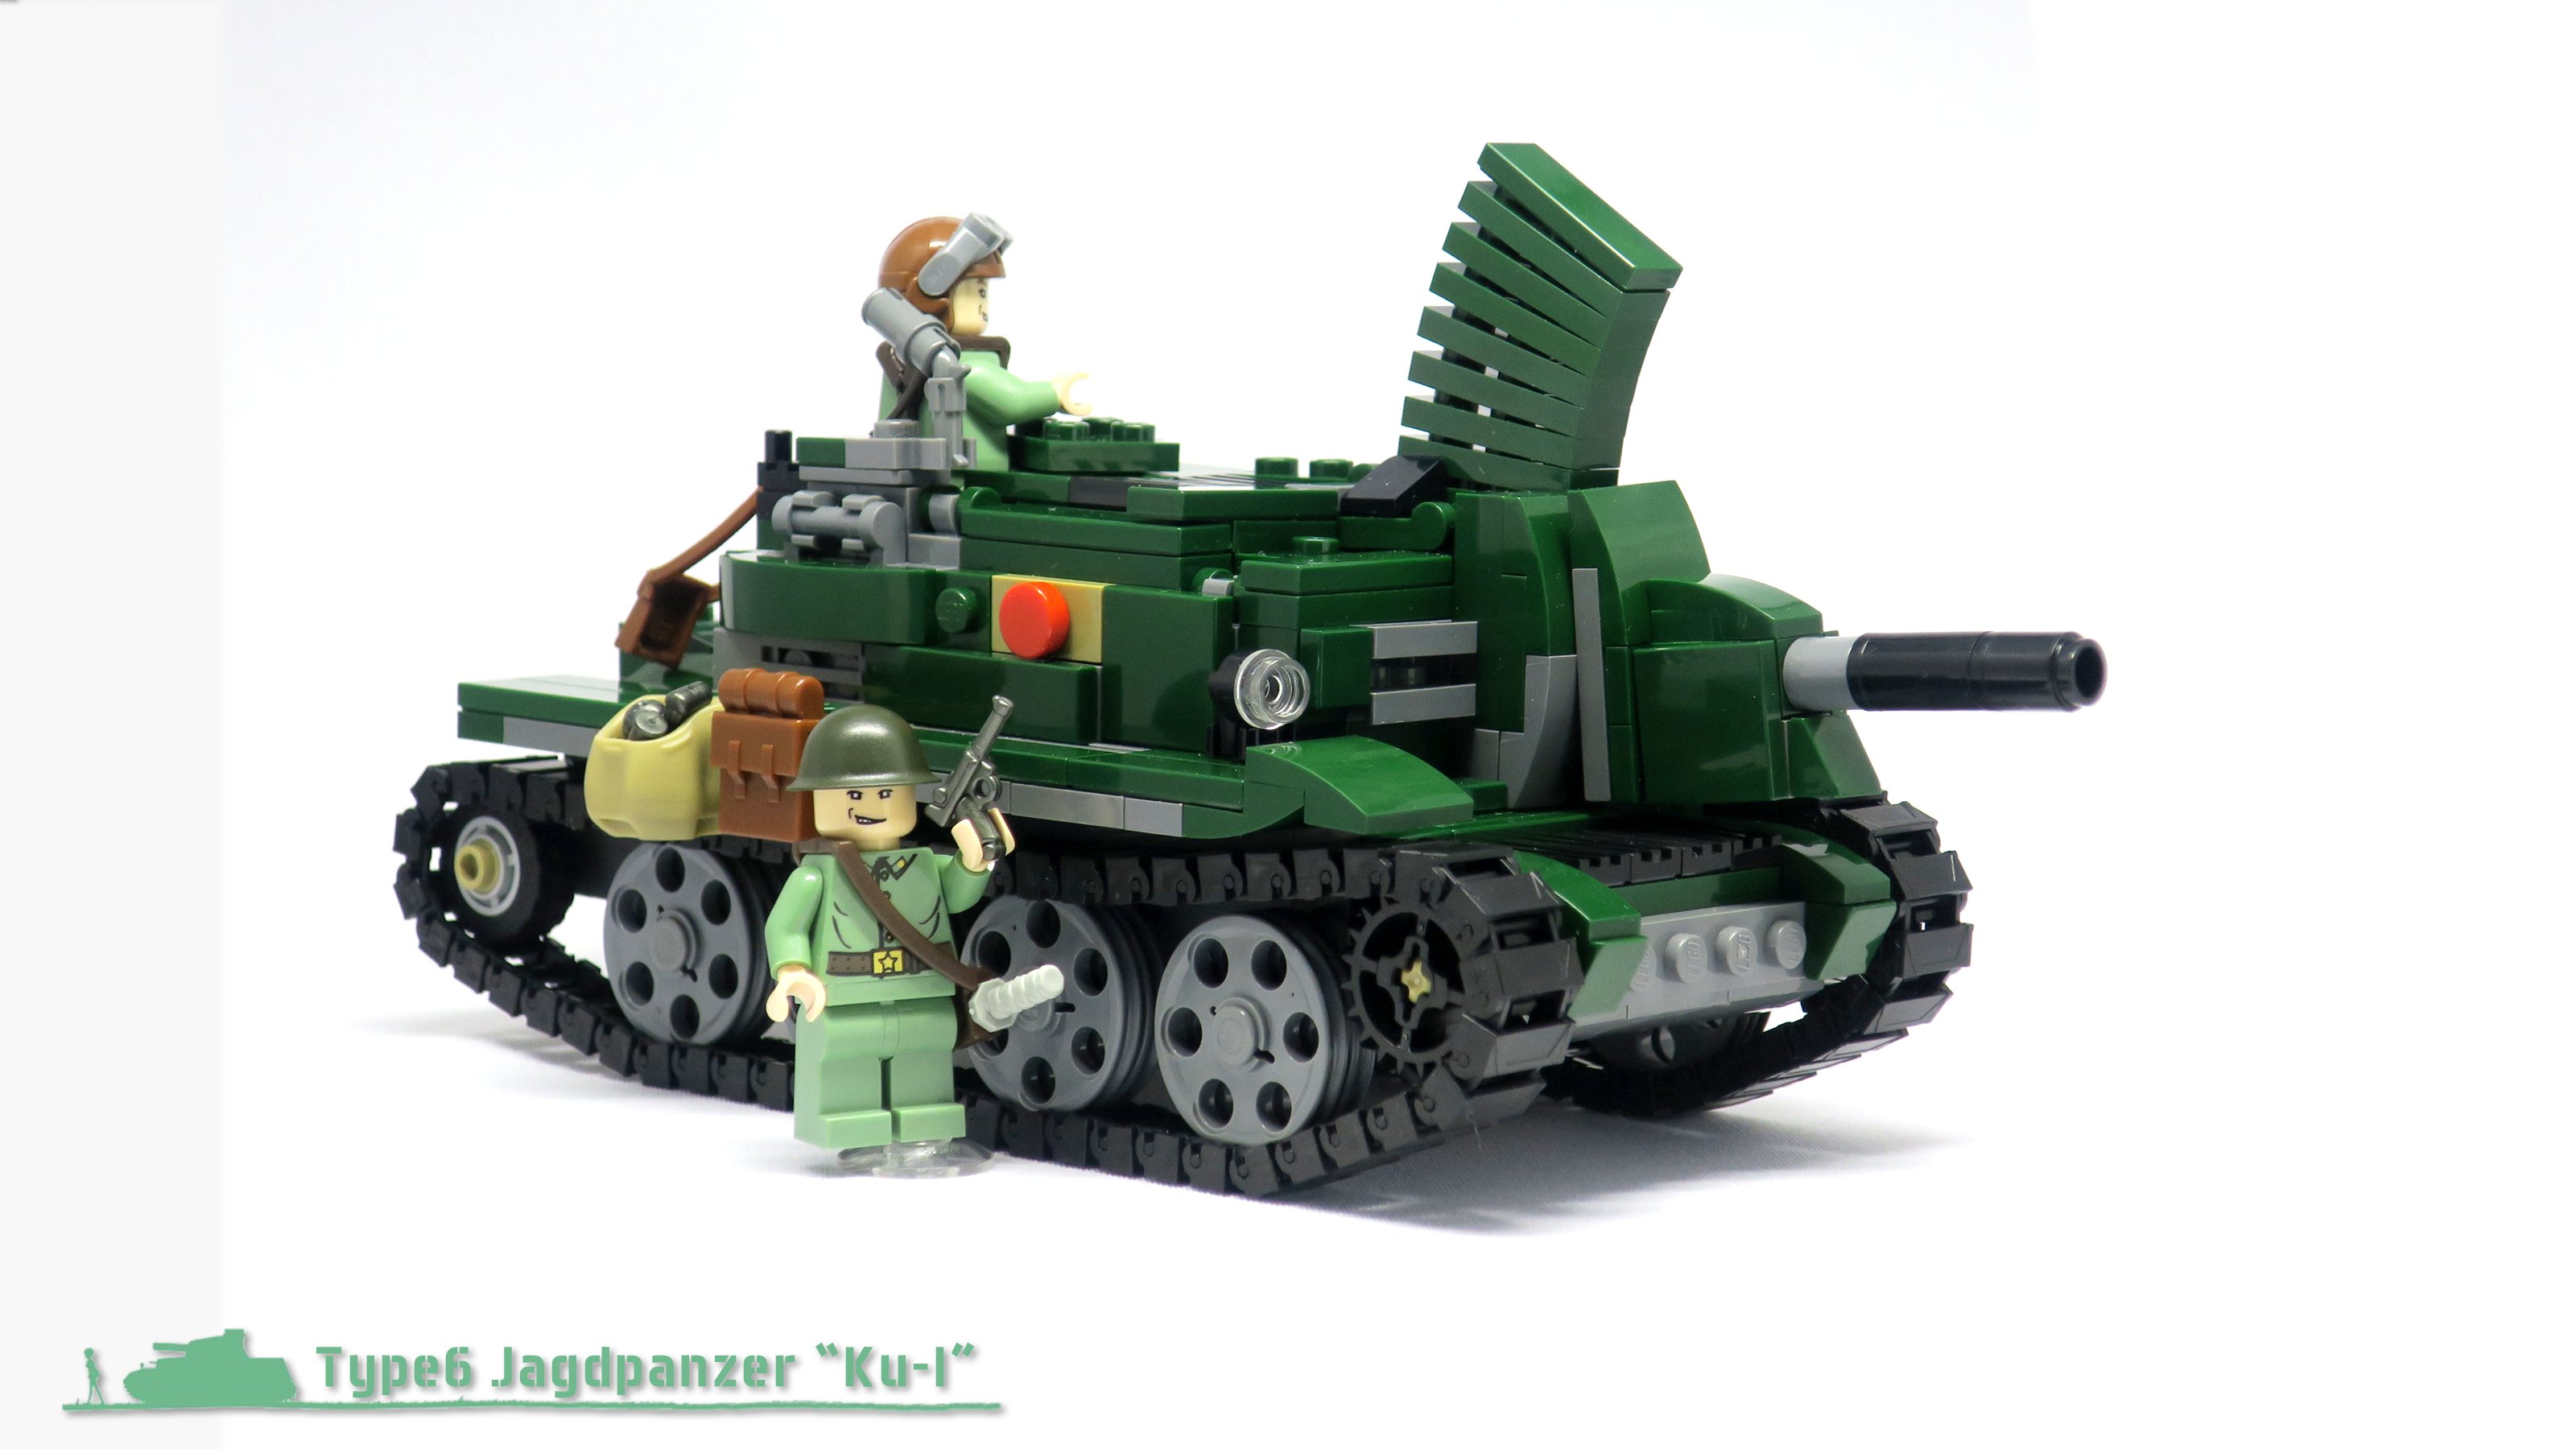 75 Nanago Japanese Afol レゴ 六式駆逐戦車 イ号 秘匿名称 クイ ドイツ国防軍 技師とともに開発した日本初の駆逐戦車 主砲には3連発 可能な多弾速射砲 57mm 長口径 を採用 奇襲により多くの戦車を撃破した Lego レゴ レゴ戦車 レゴミリタリー 詳細は